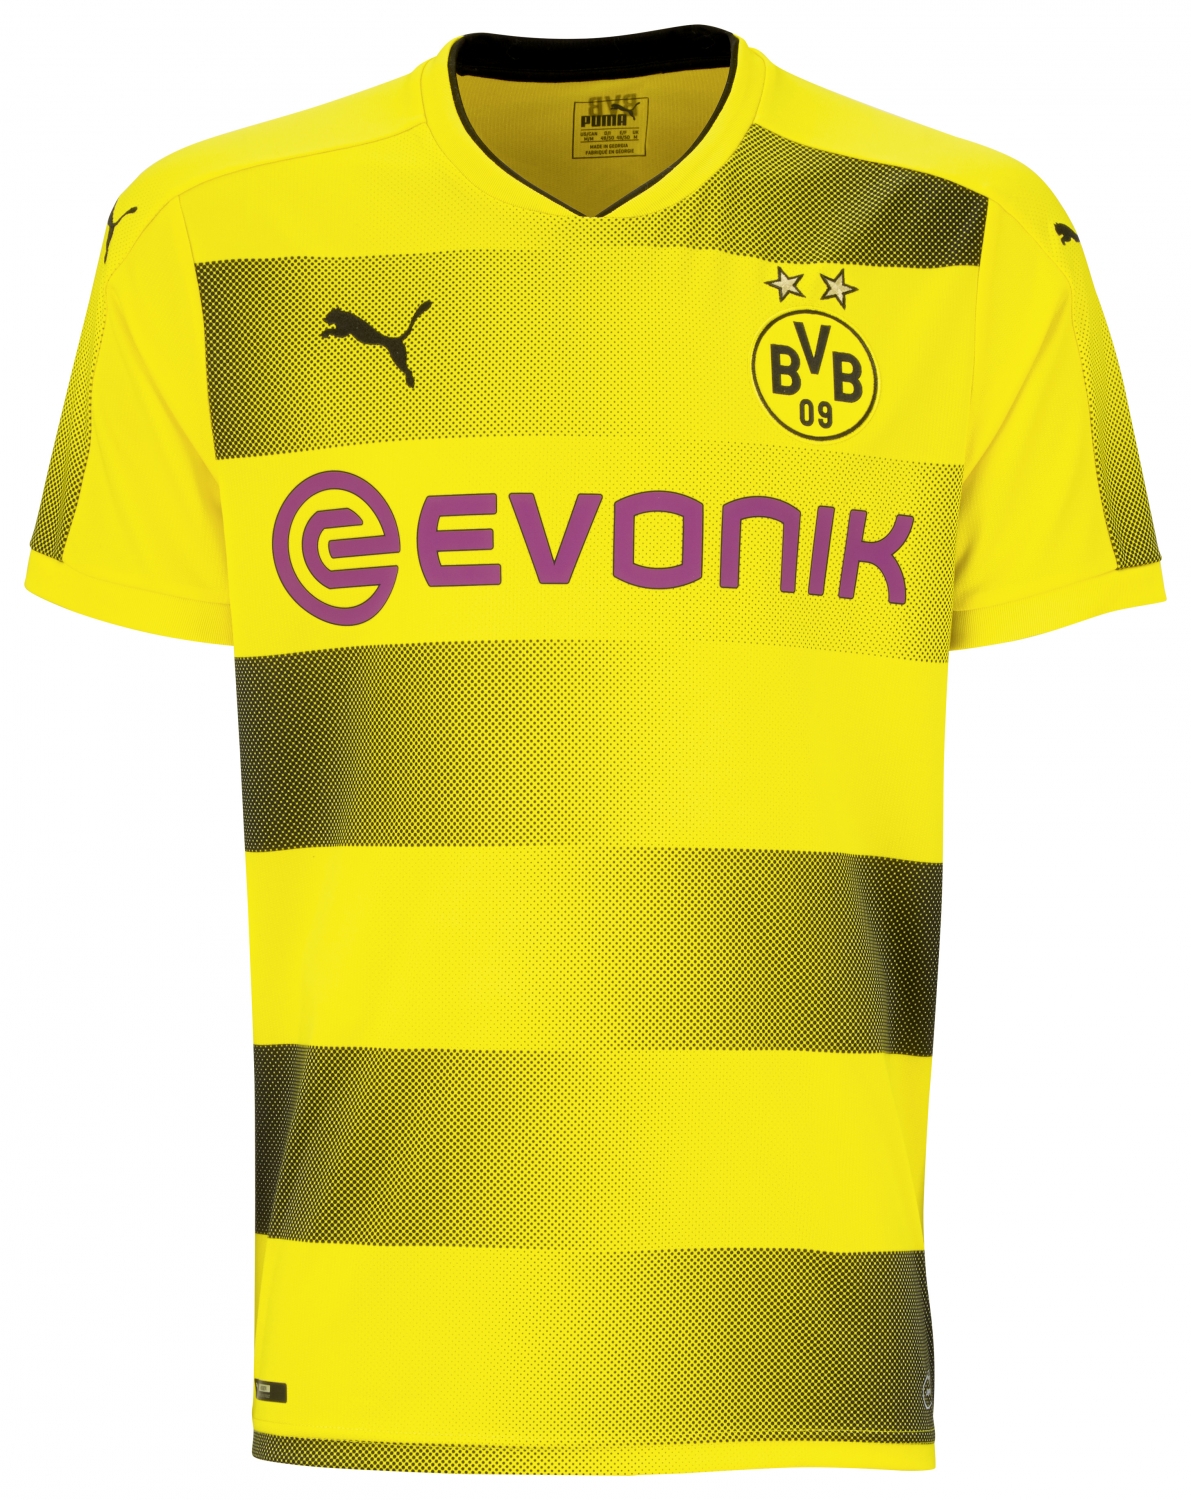 Puma Borussia Dortmund Heimtrikot Herren BVB Home 2017/18 gelb schwarz